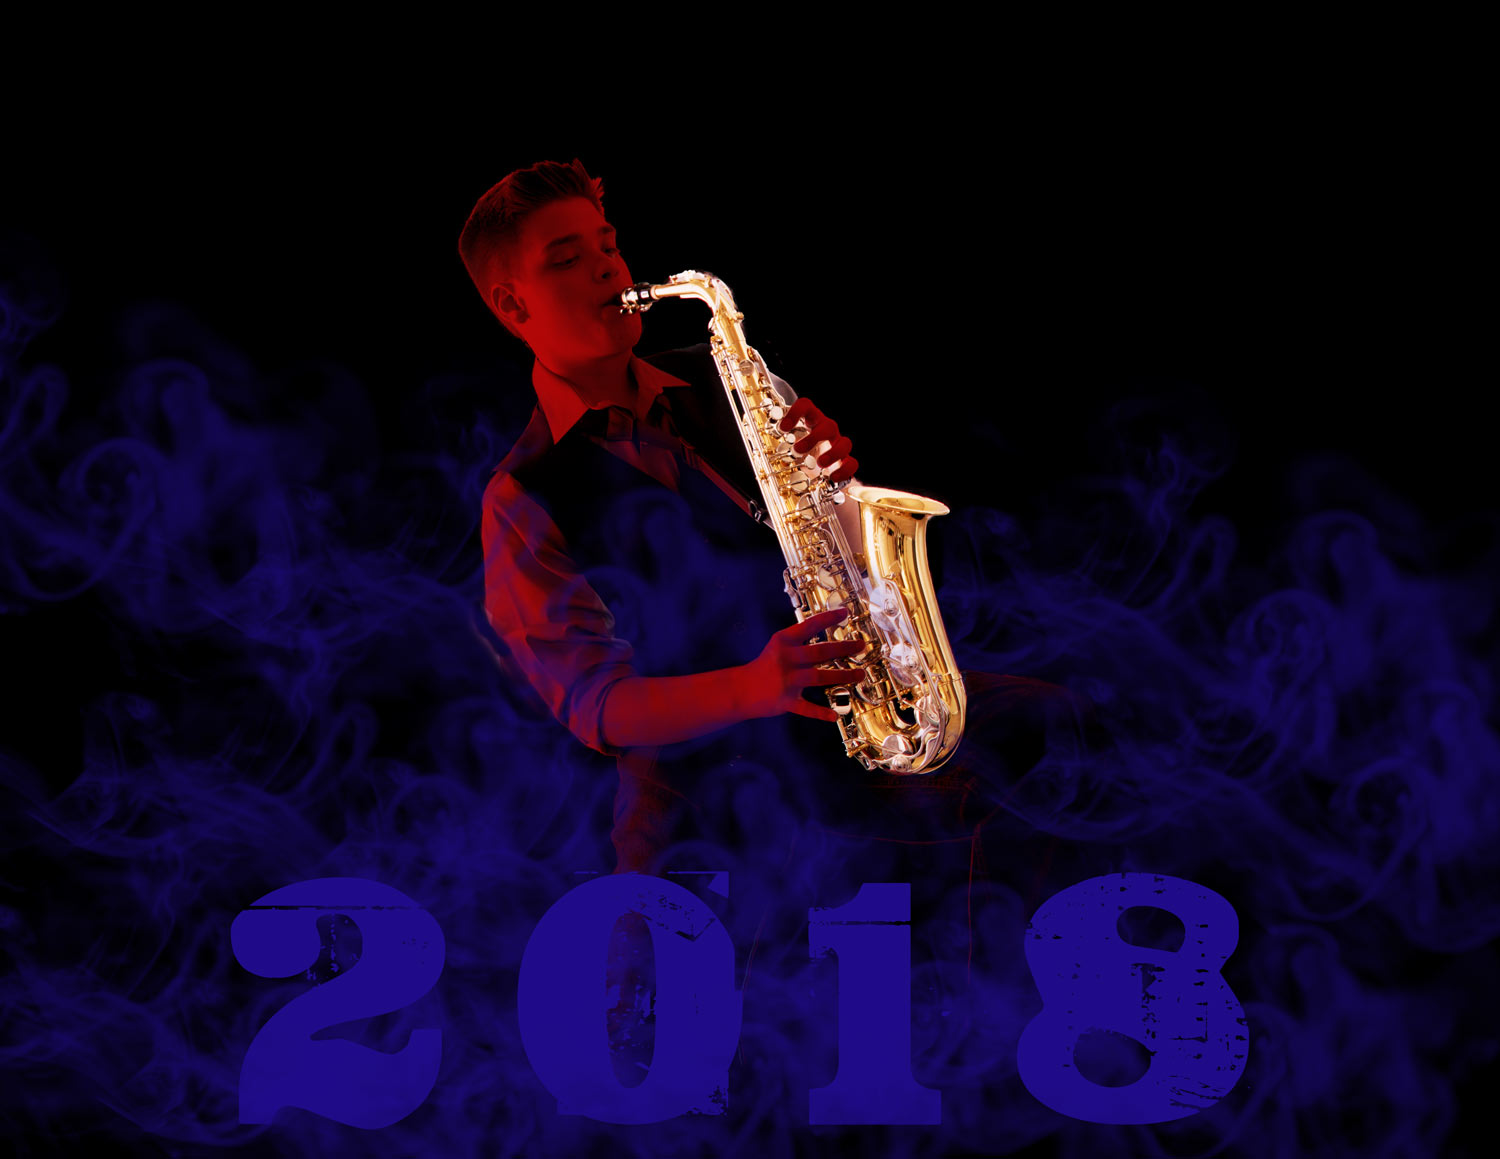 tween sax player portrait featuring the sax